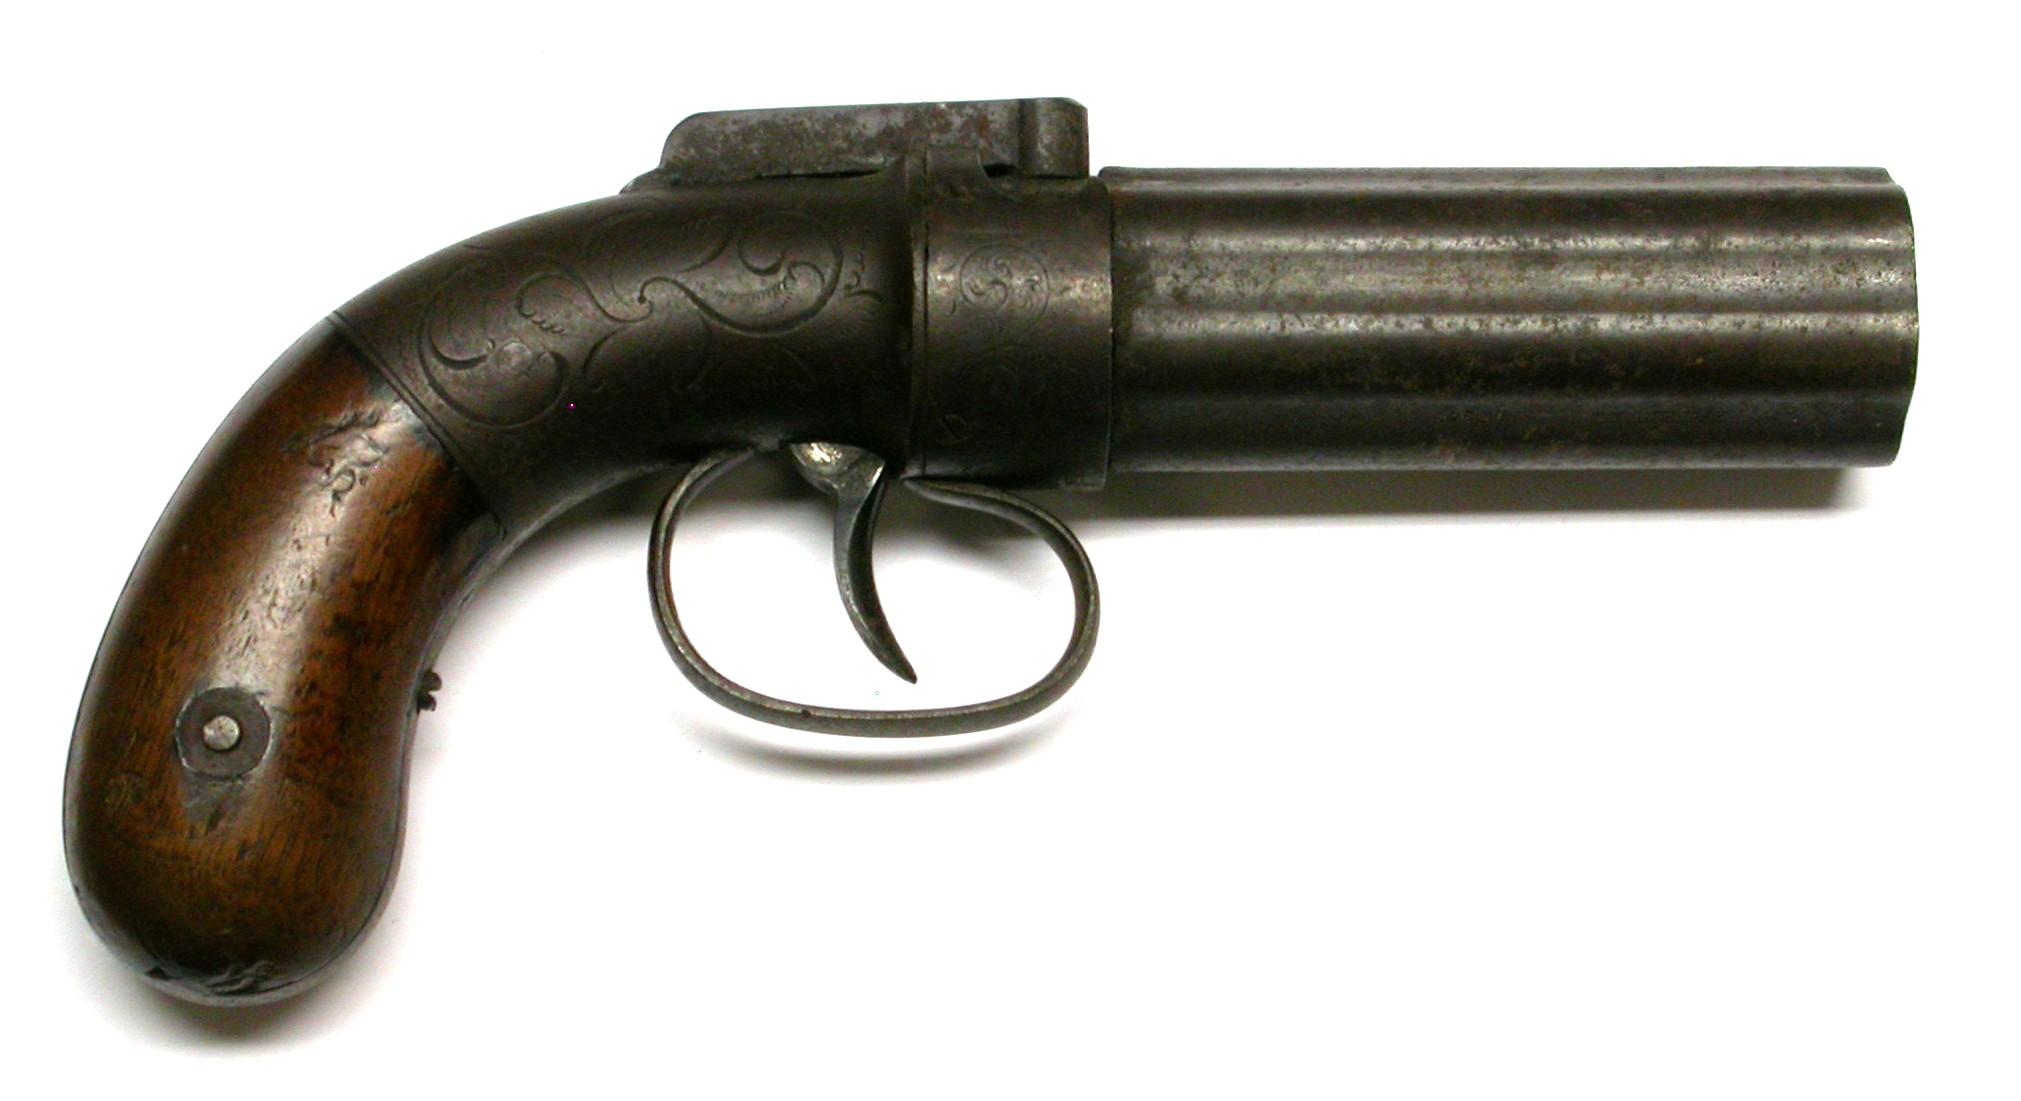 Allen & Thurber 1840s era .31 Caliber Double-Action Pepperbox Pistol - Antique - no FFL needed (SMD)